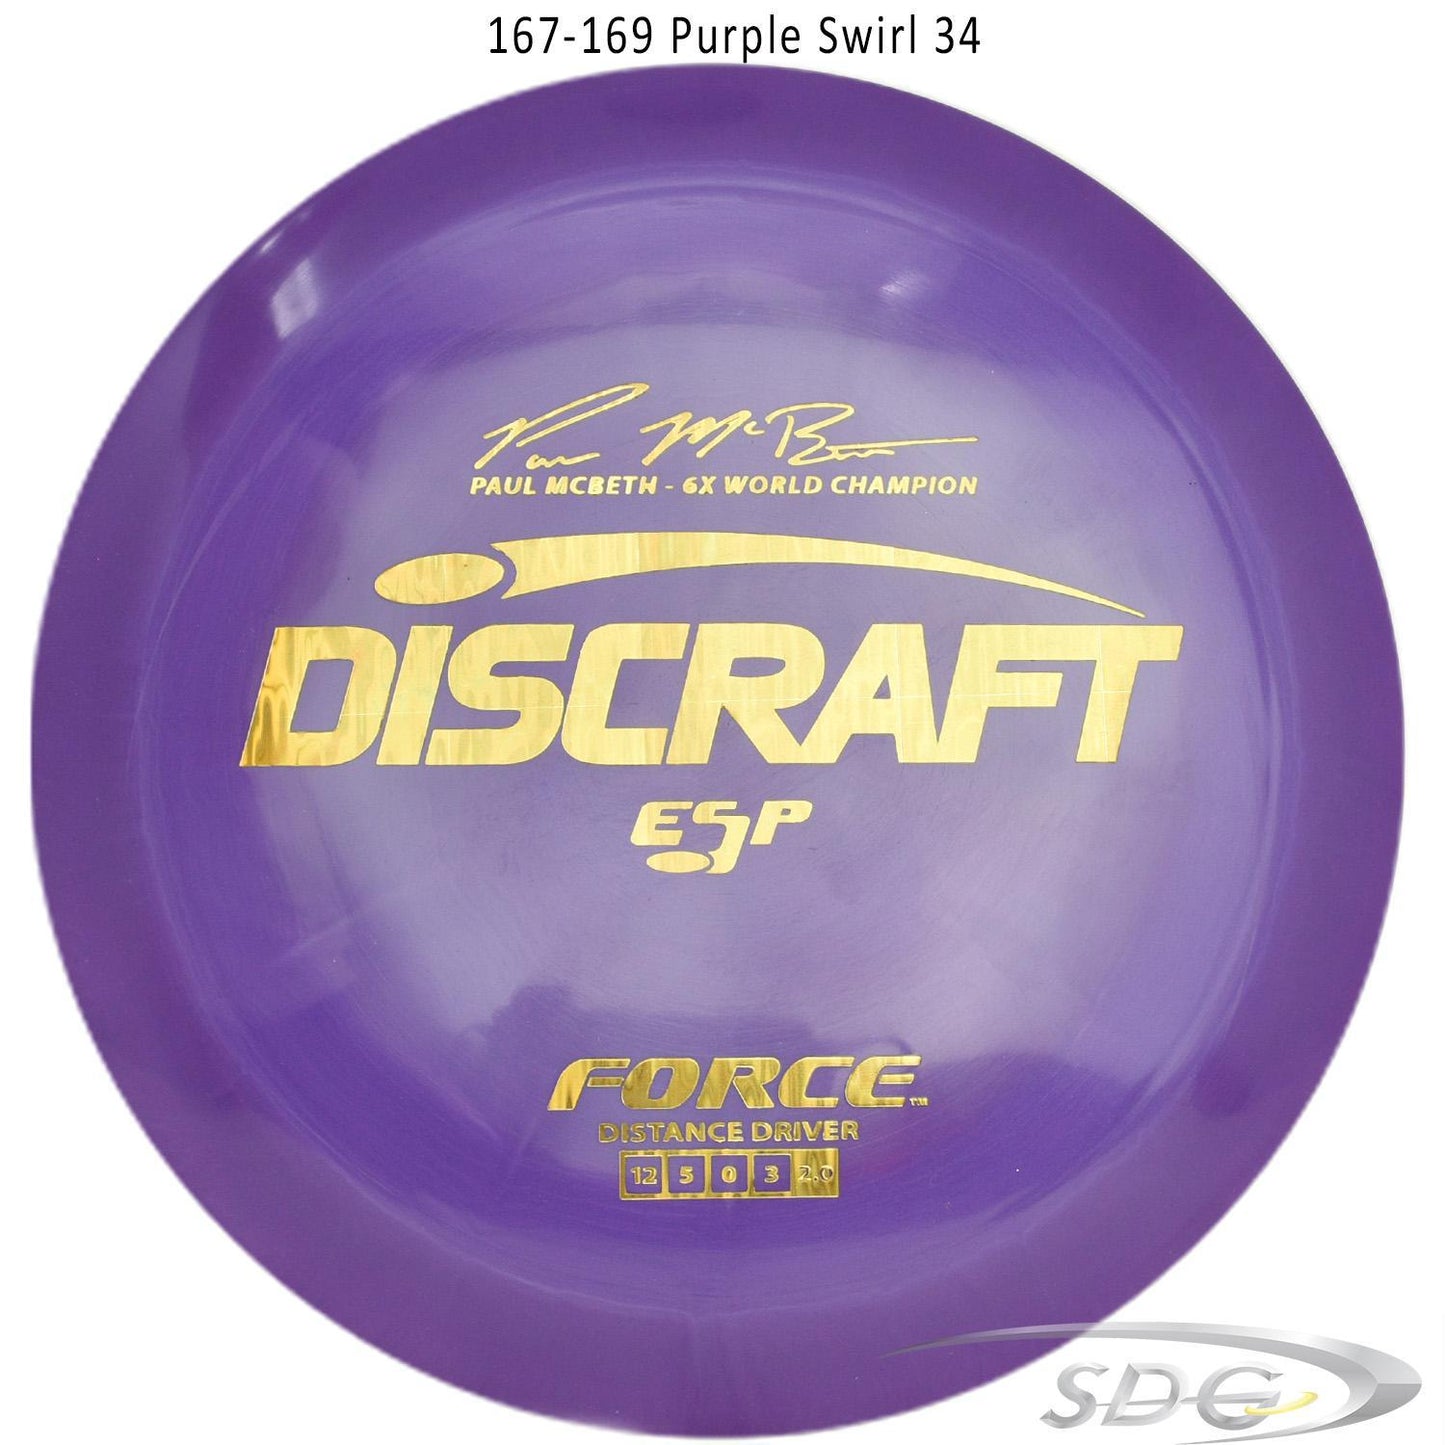 discraft-esp-force-6x-paul-mcbeth-signature-disc-golf-distance-driver 167-169 Purple Swirl 34